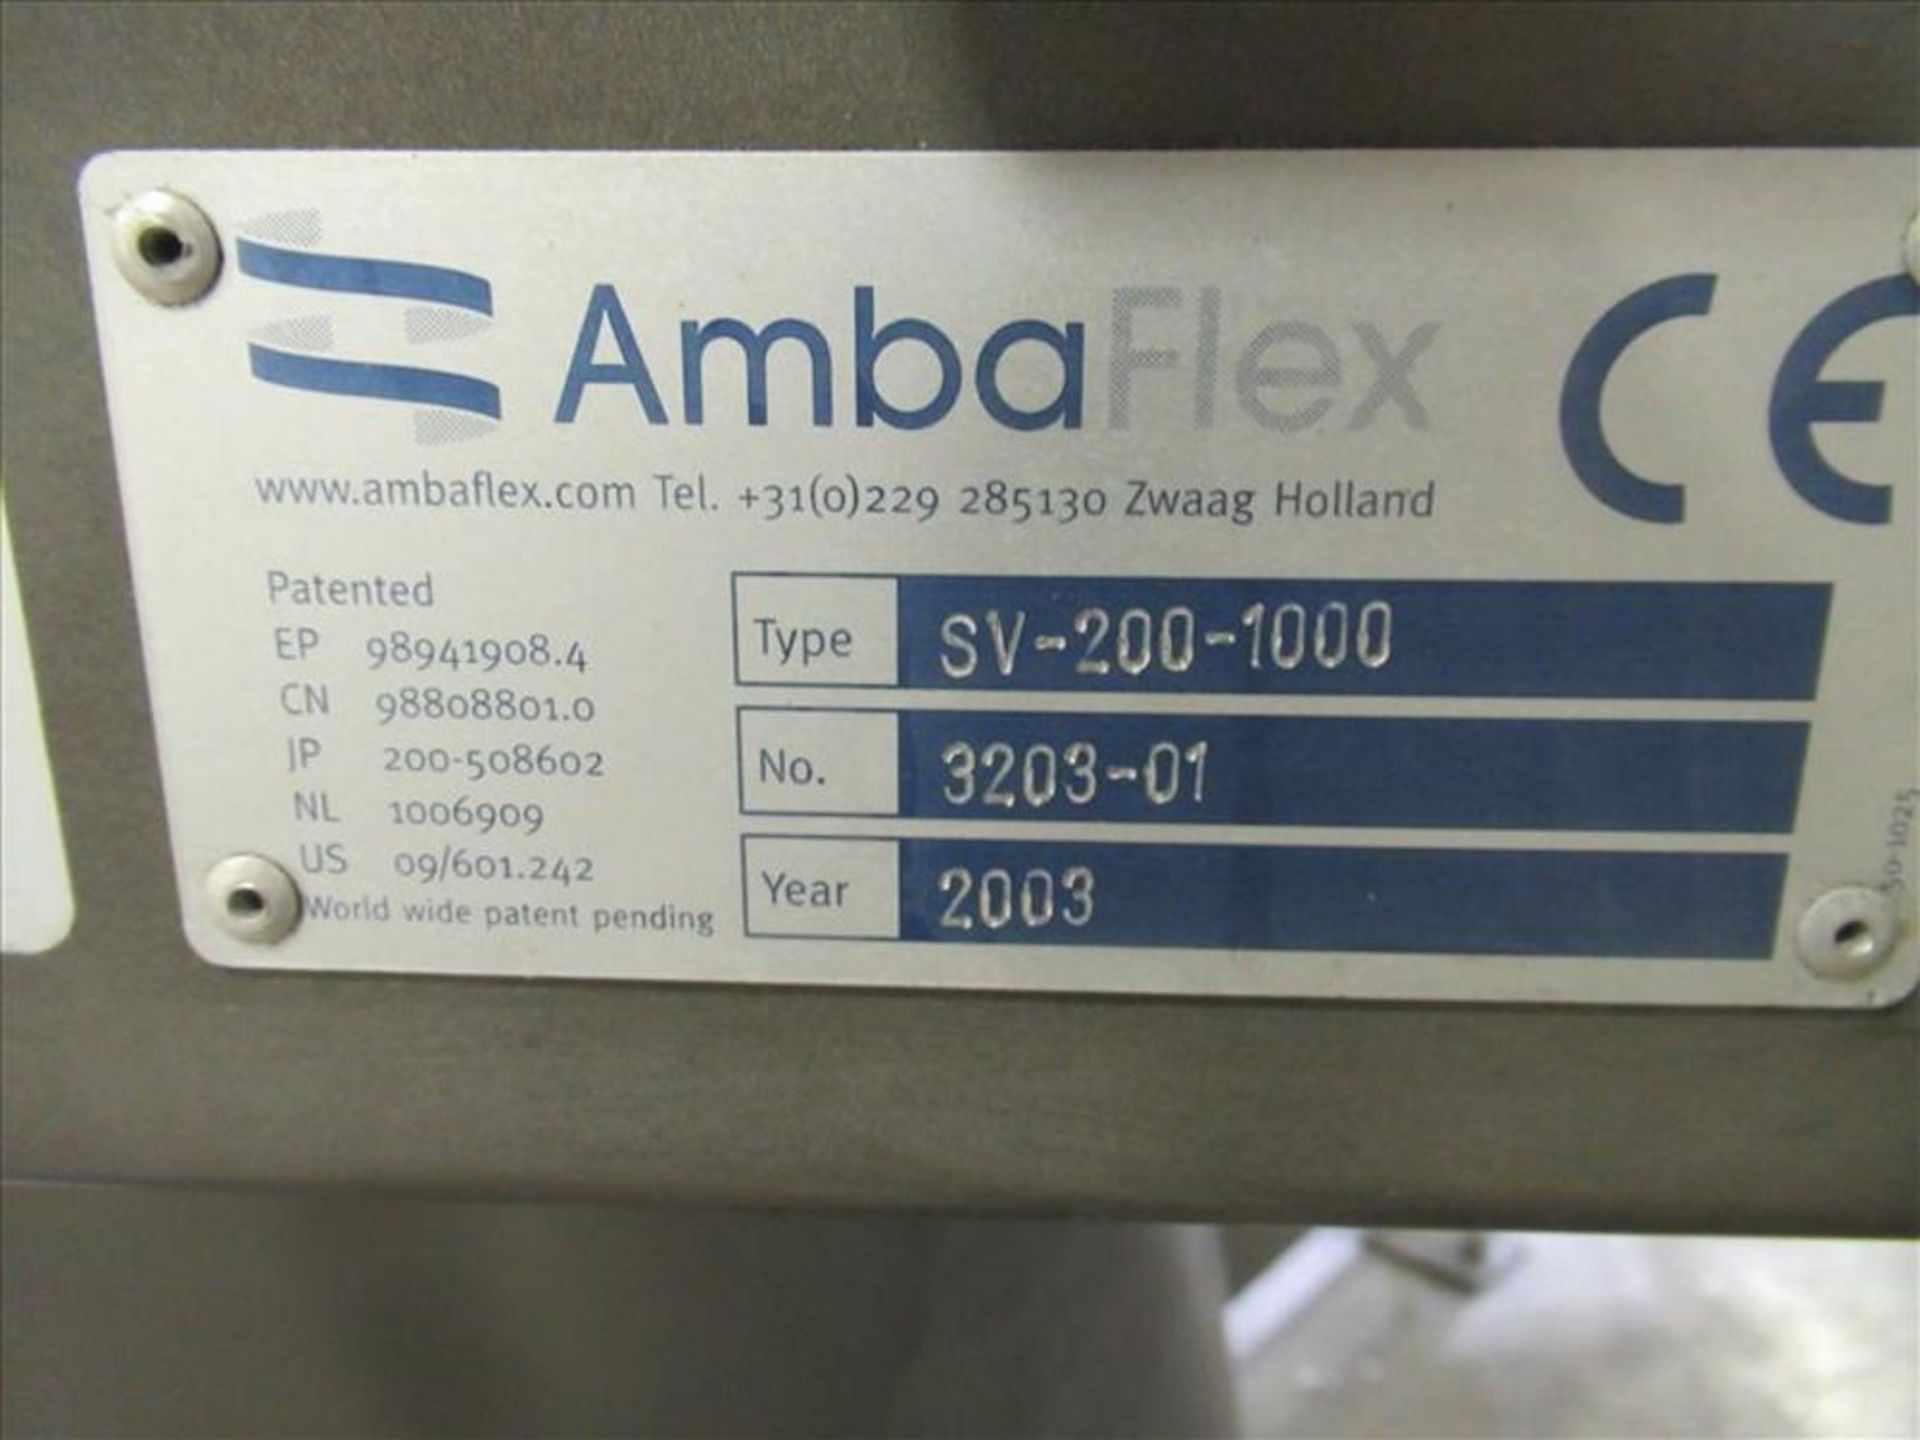 AmbaFlex spiral case elevator #1 mod. no. SV-200-1000 ser. no. 3203-01 4 tier continuous motion mild - Image 2 of 2